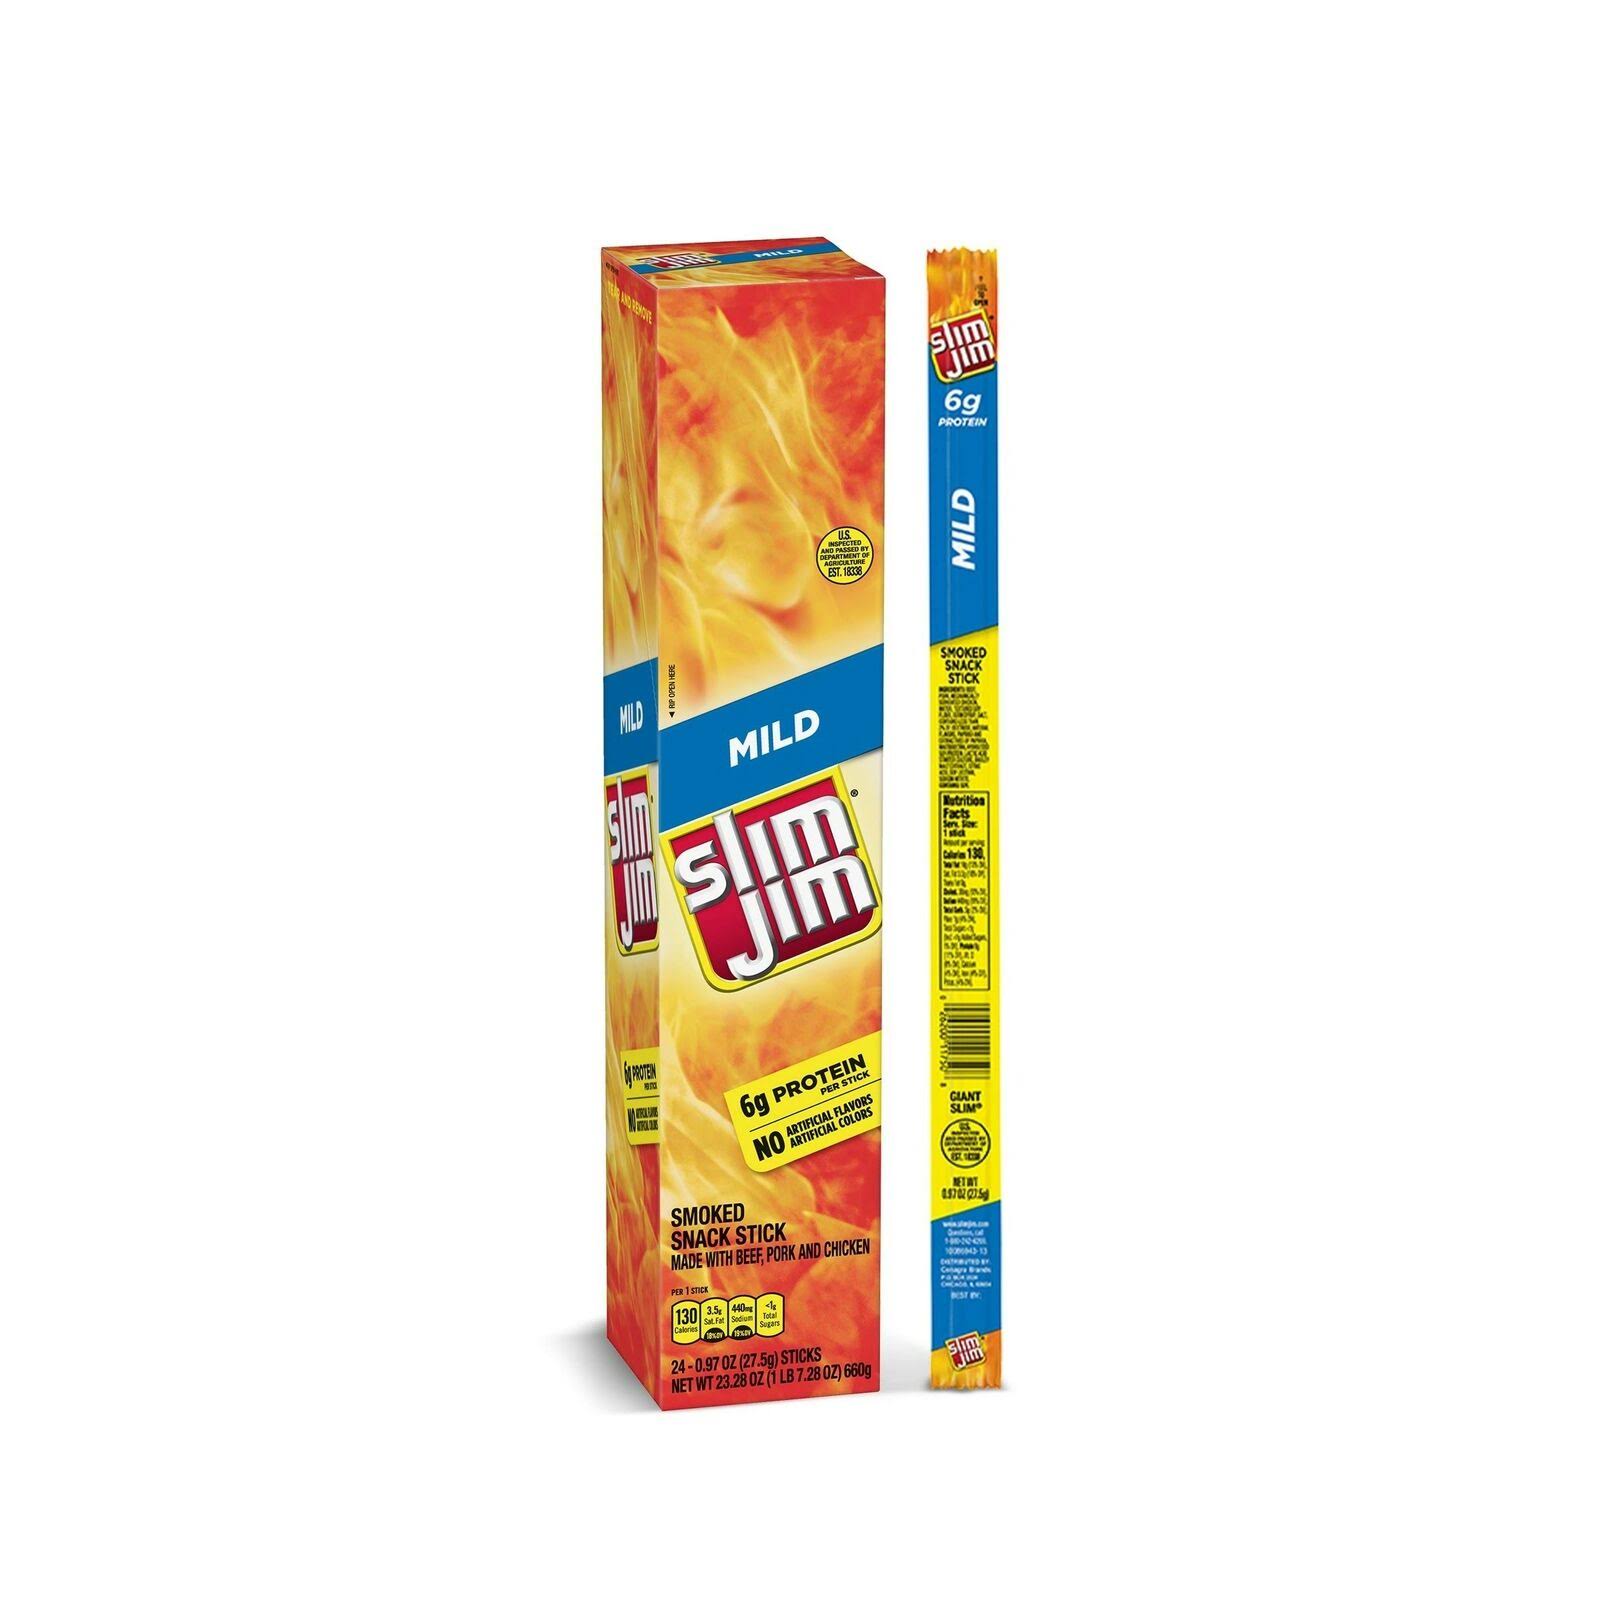 Giant Slim Jim Spicy Smoked Snack - Mild, 24ct